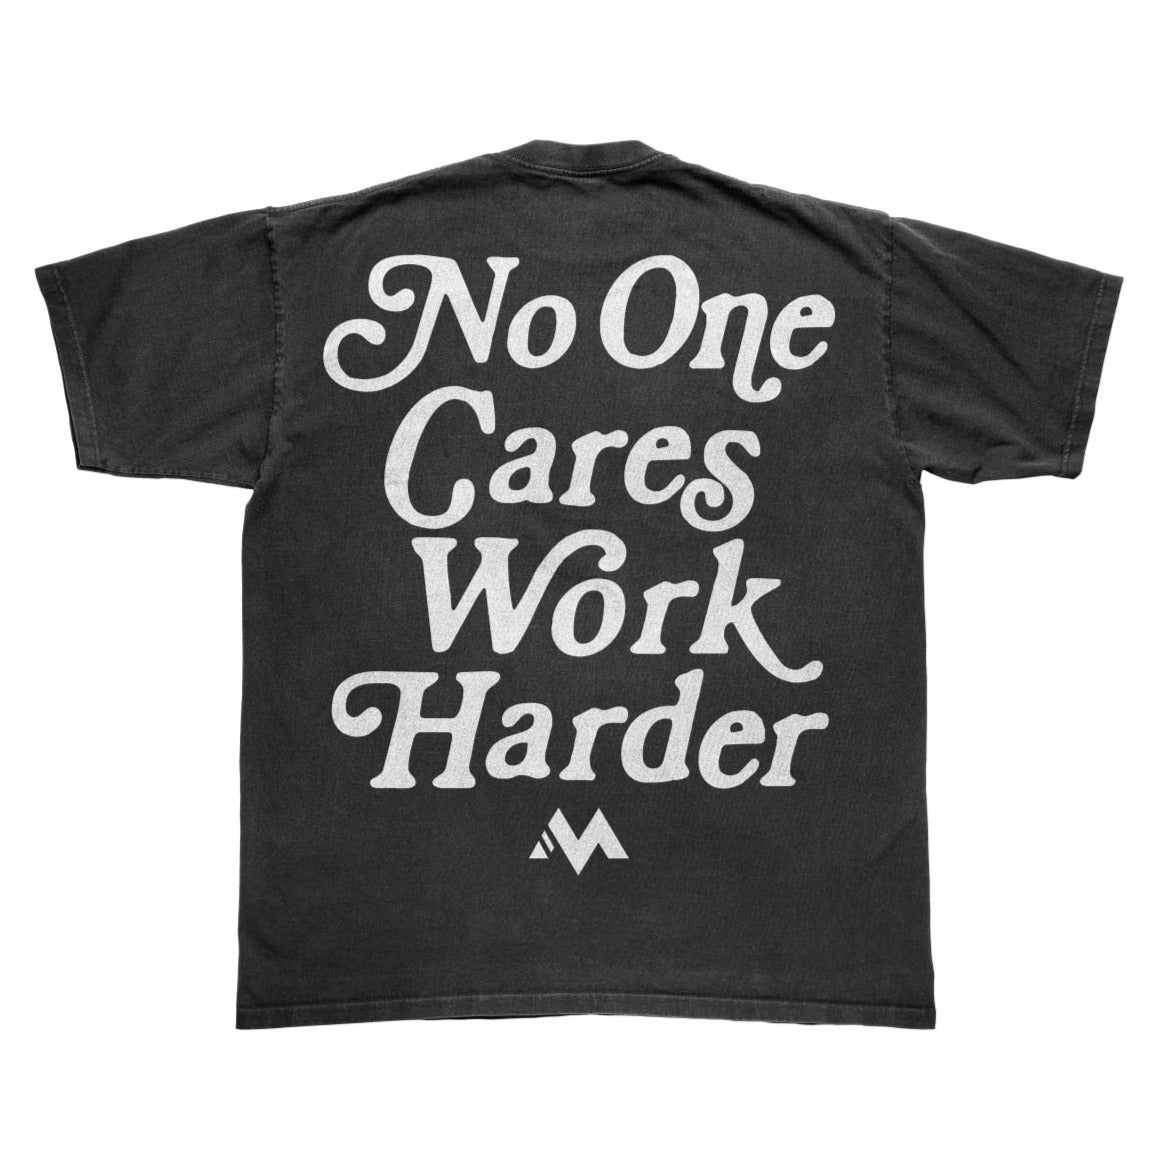 'NO ONE CARES WORK HARDER' TEE - JET BLACK